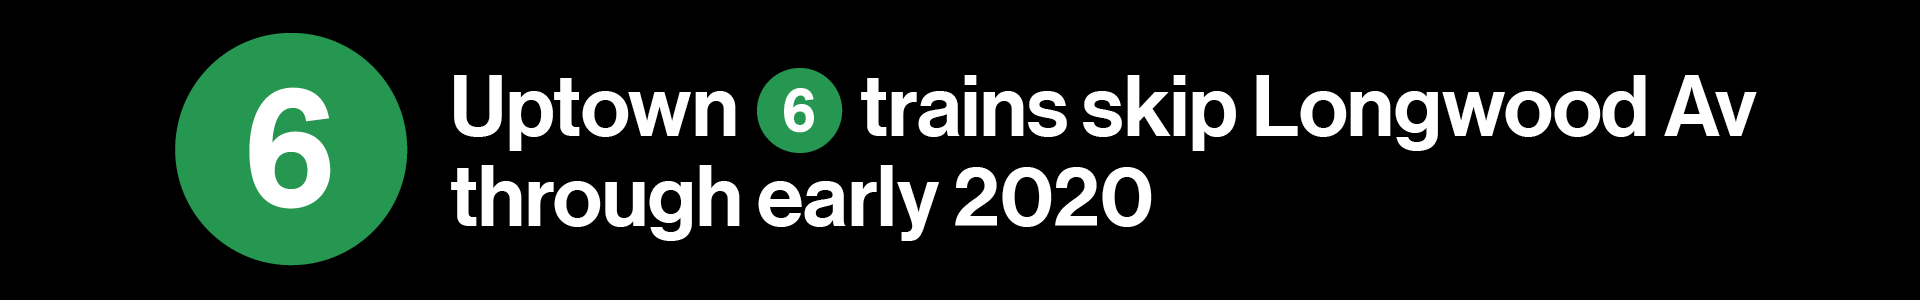 Uptown 6 trains skip Longwood Av until early 2020